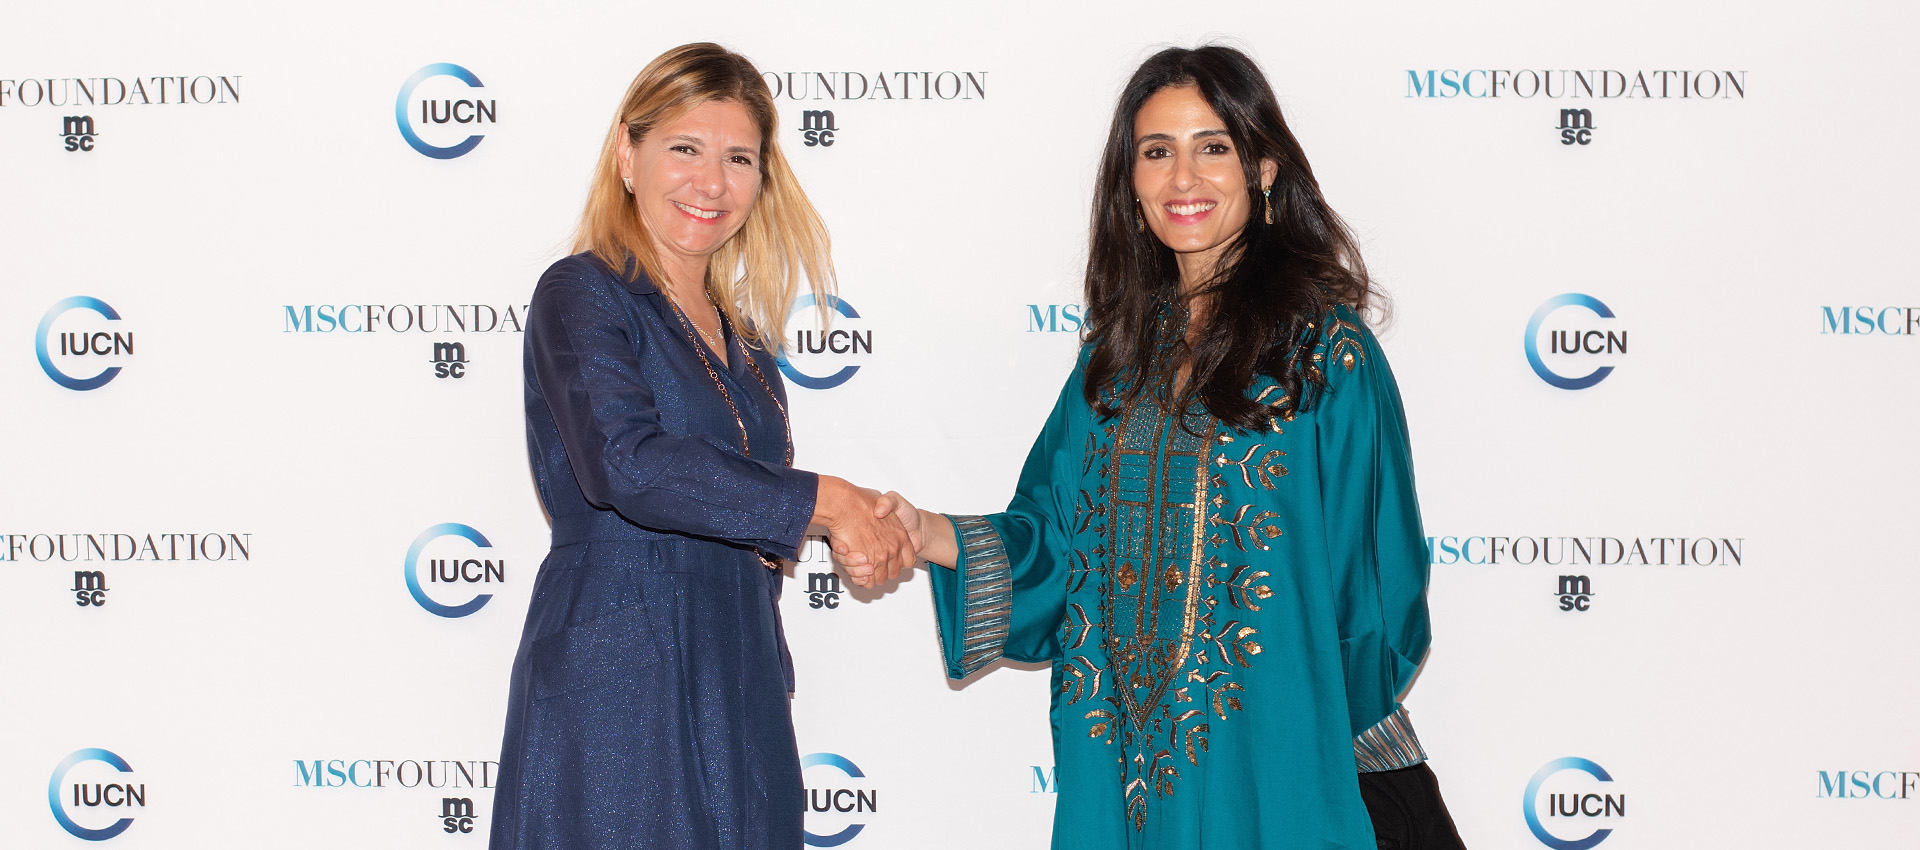 IUCN Partnership | MSC Foundation